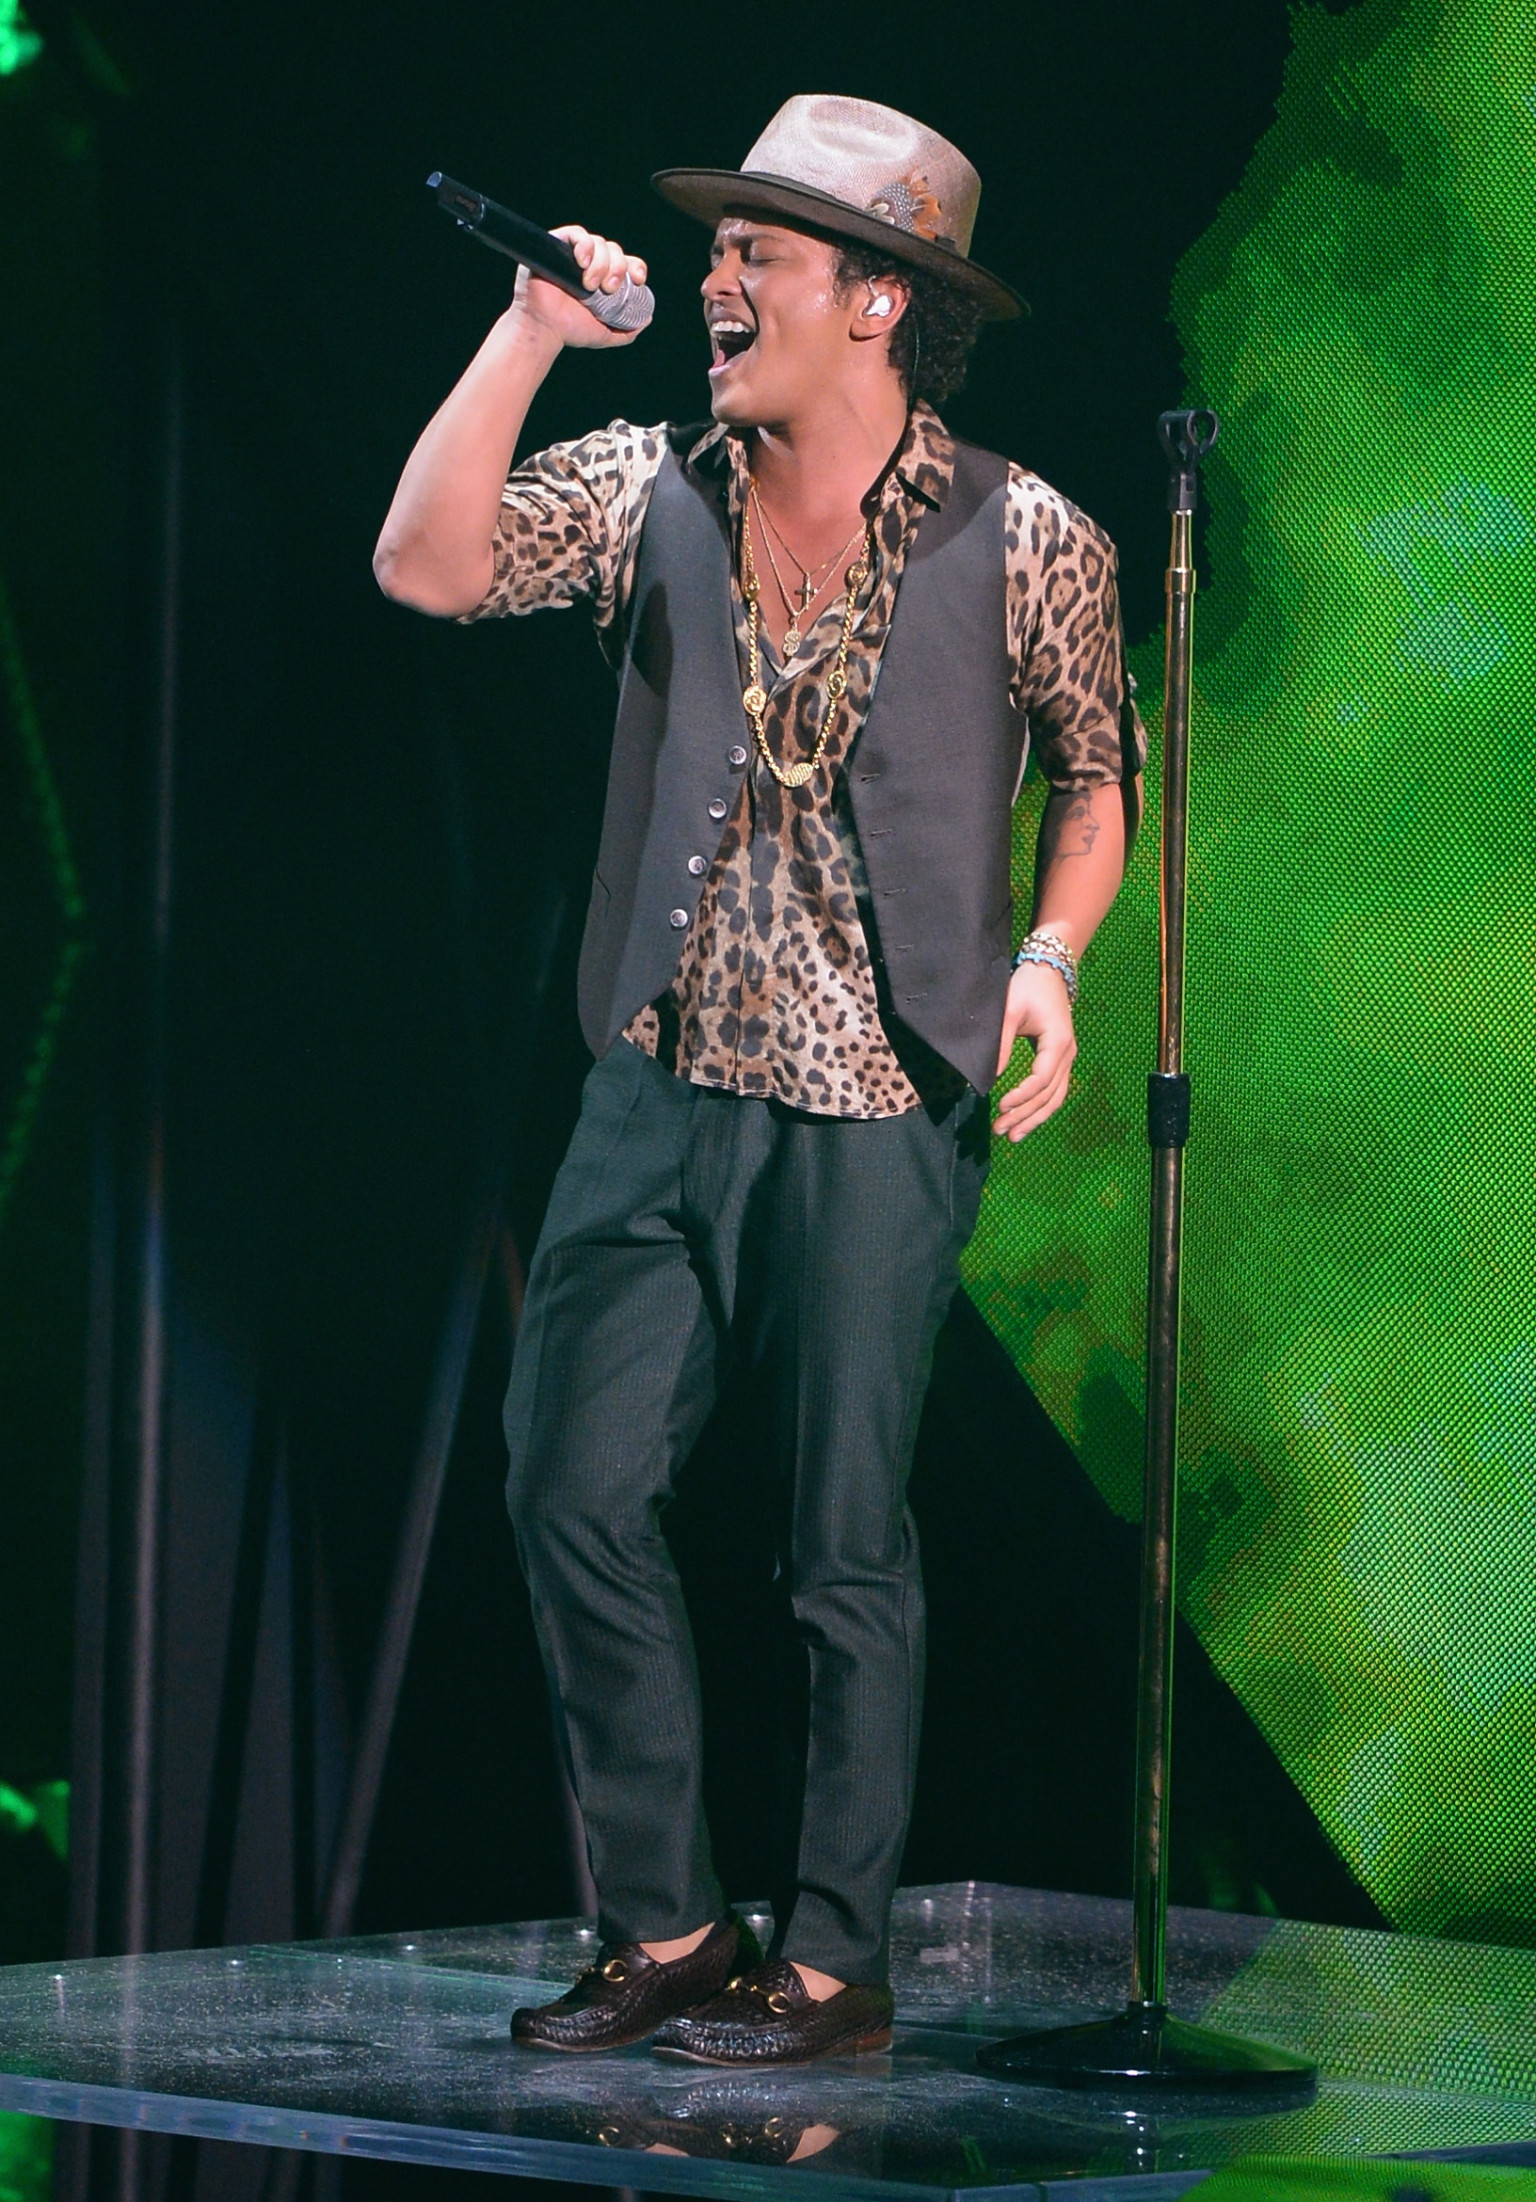 Best Male Video VMA: Bruno Mars Wins Moon Man At 2013 Video Music Awards1536 x 2202